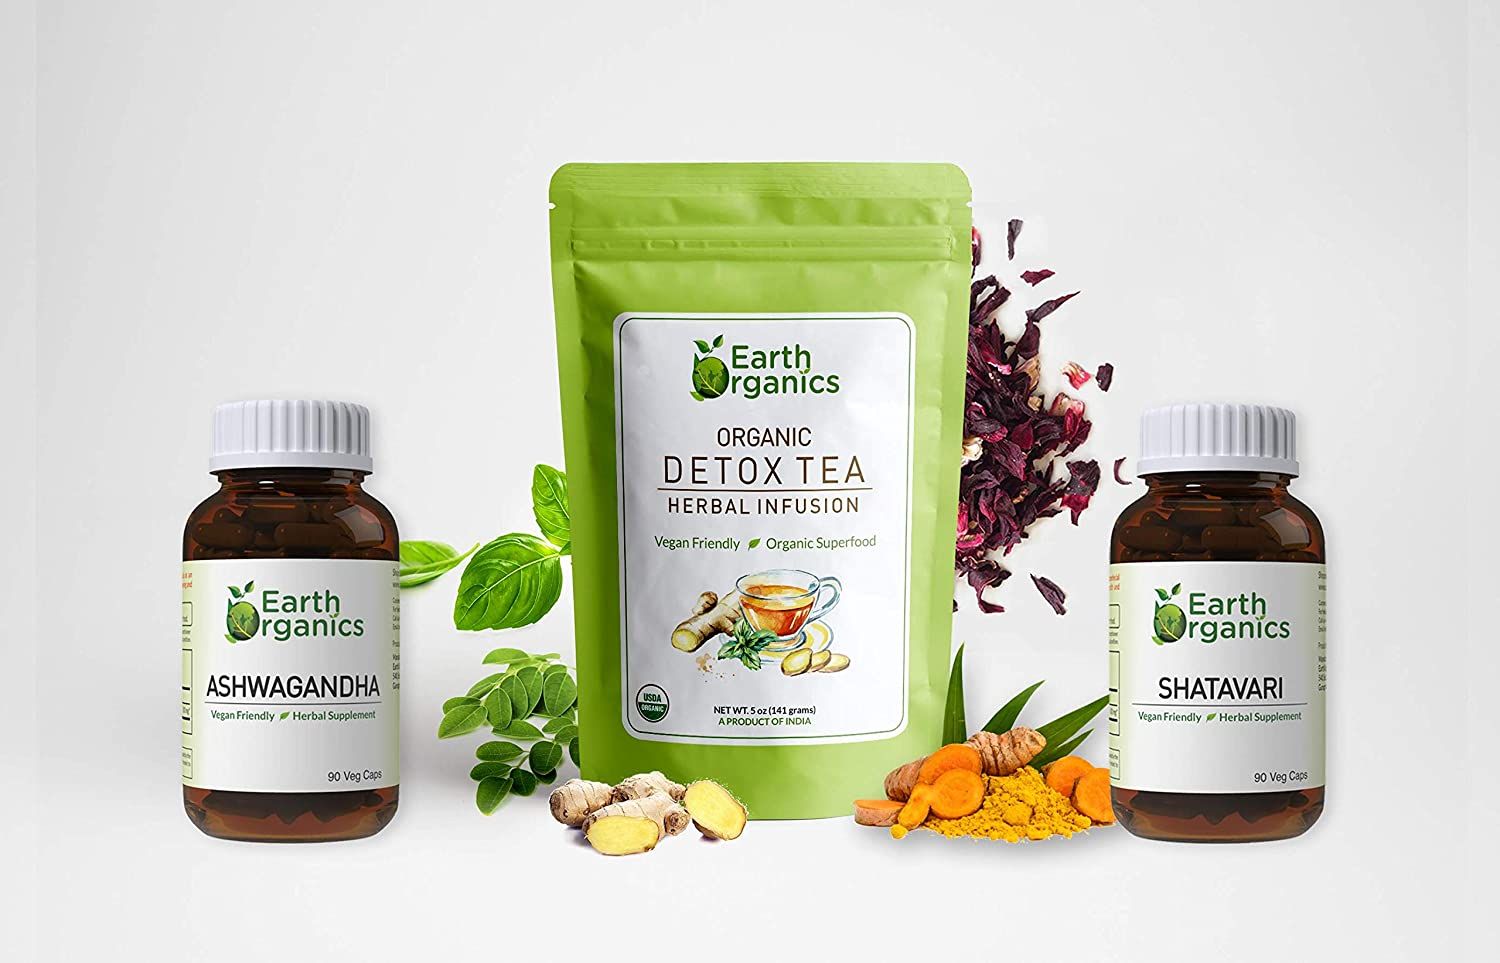 Earth Organics Detox Tea Image